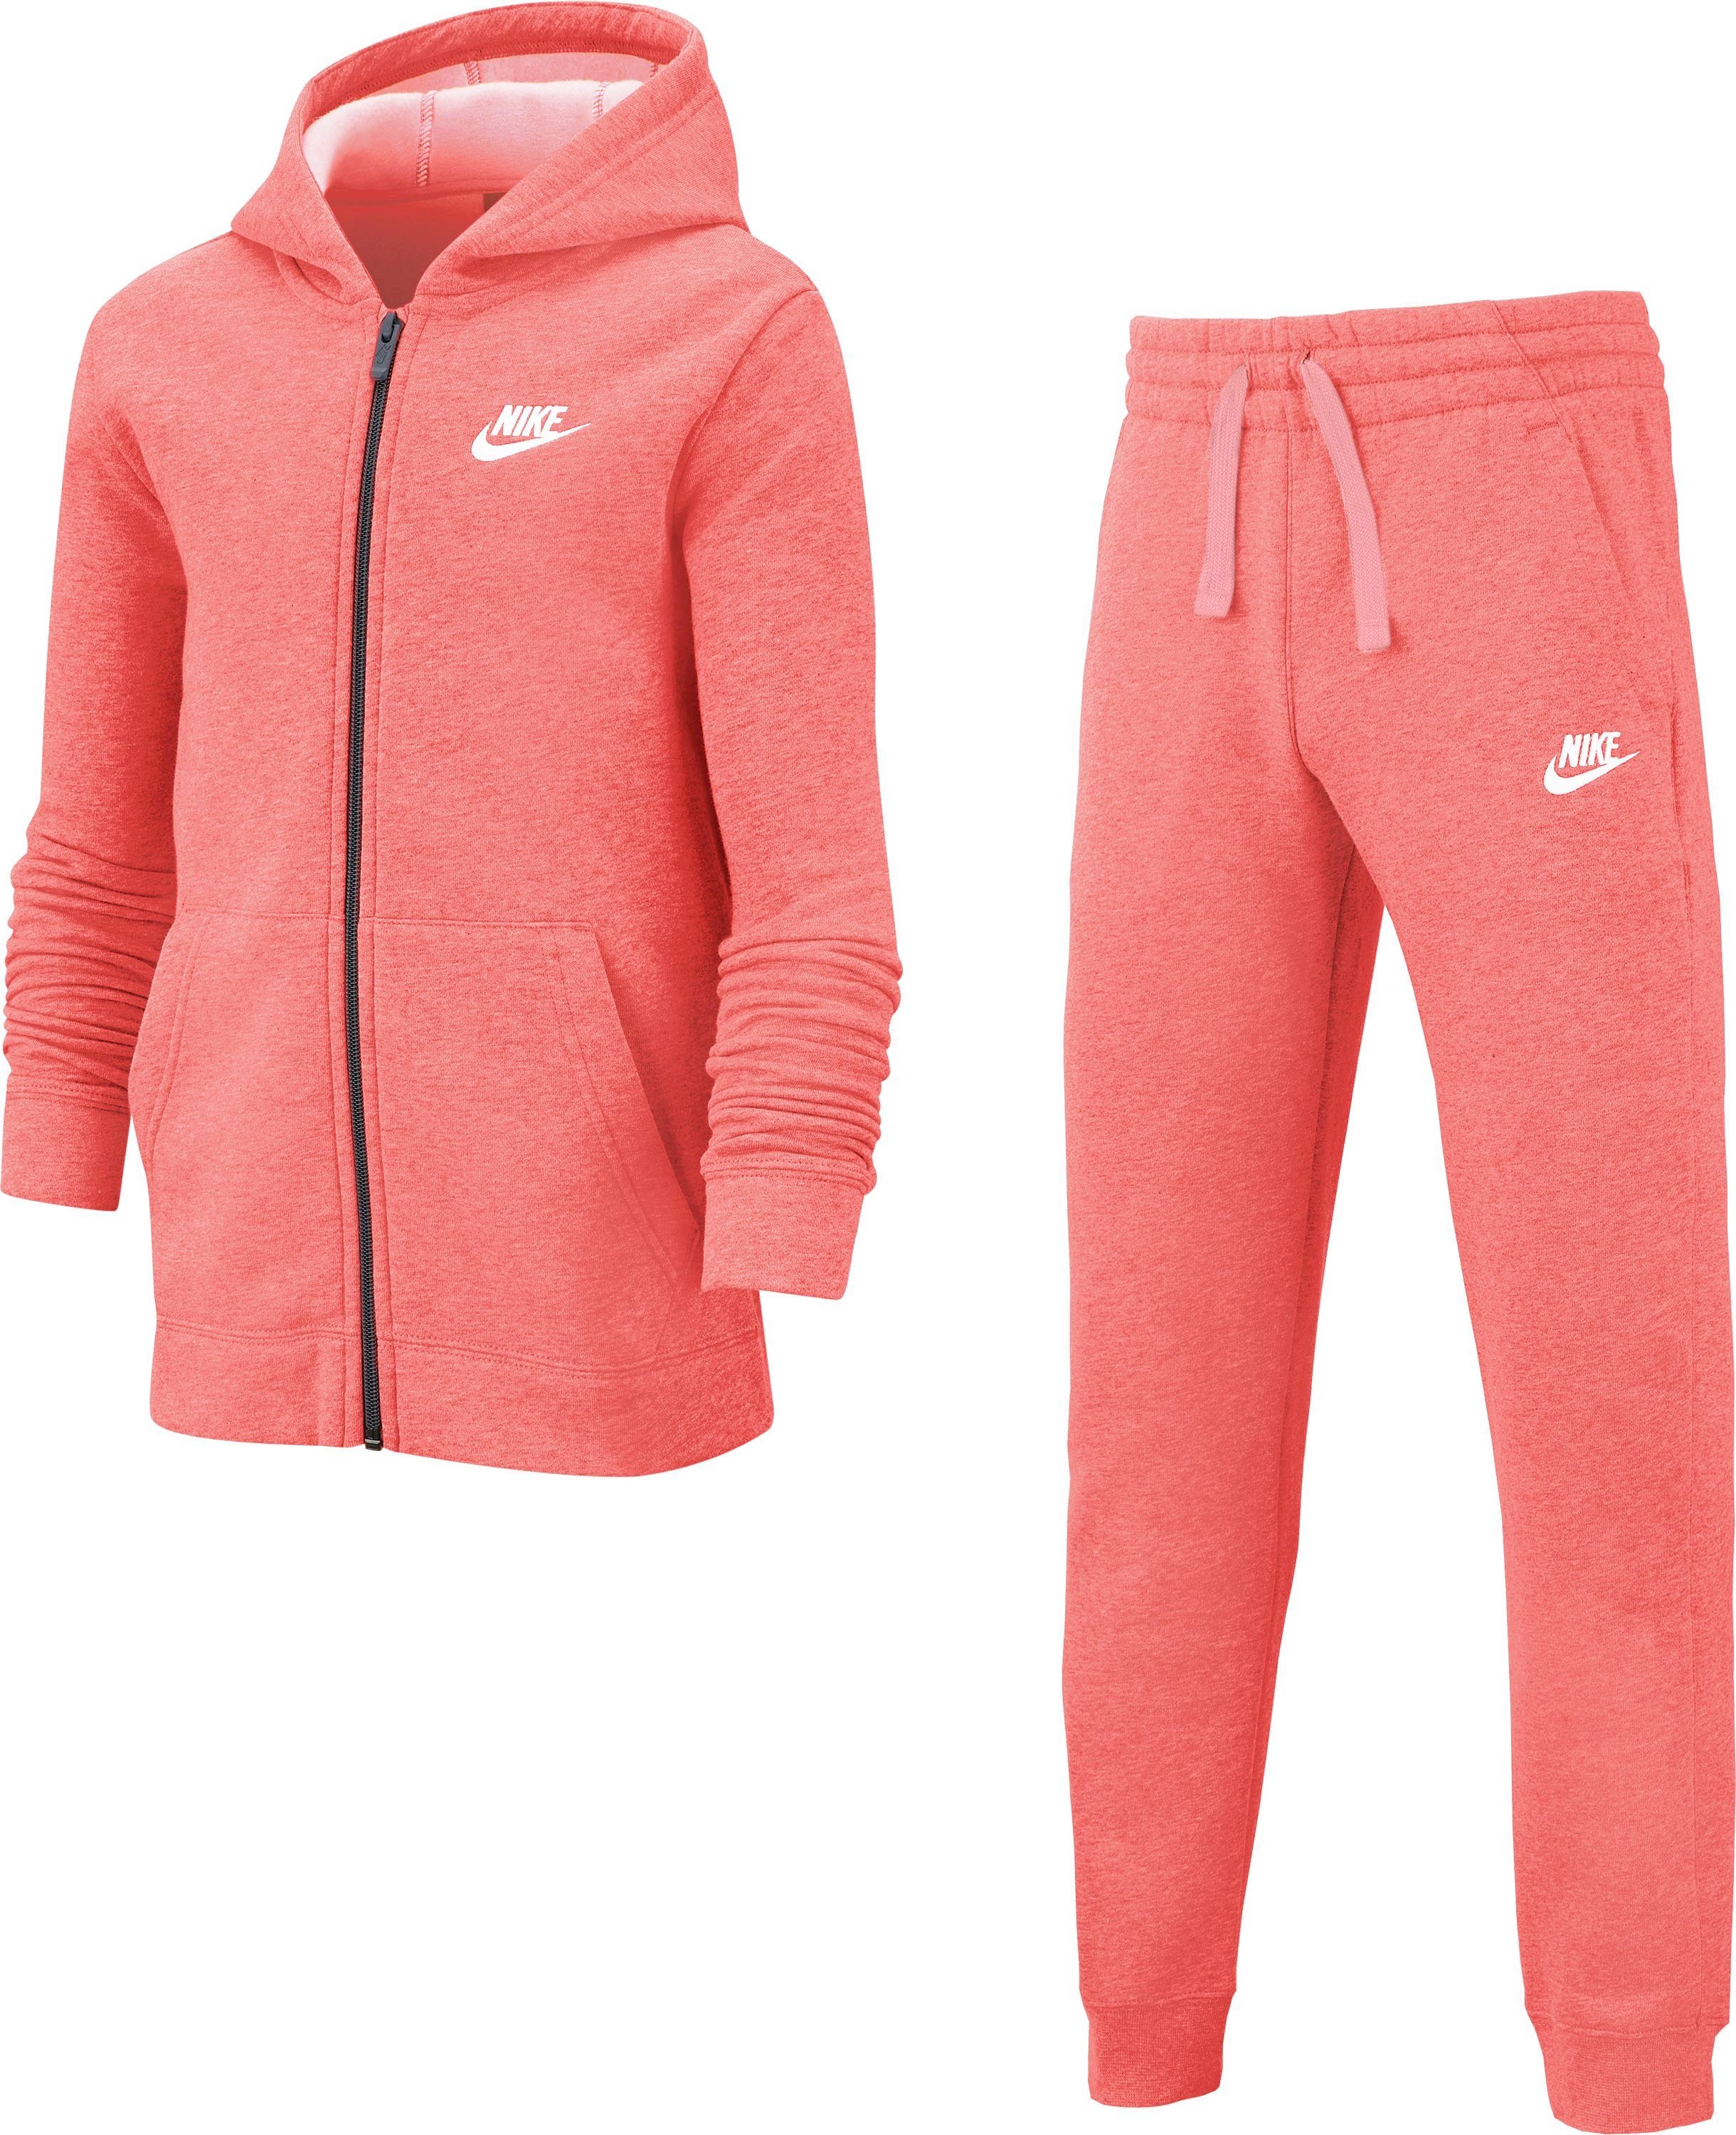 Kinder für (Set, NSW CORE Sportswear koralle Jogginganzug Nike 2-tlg),